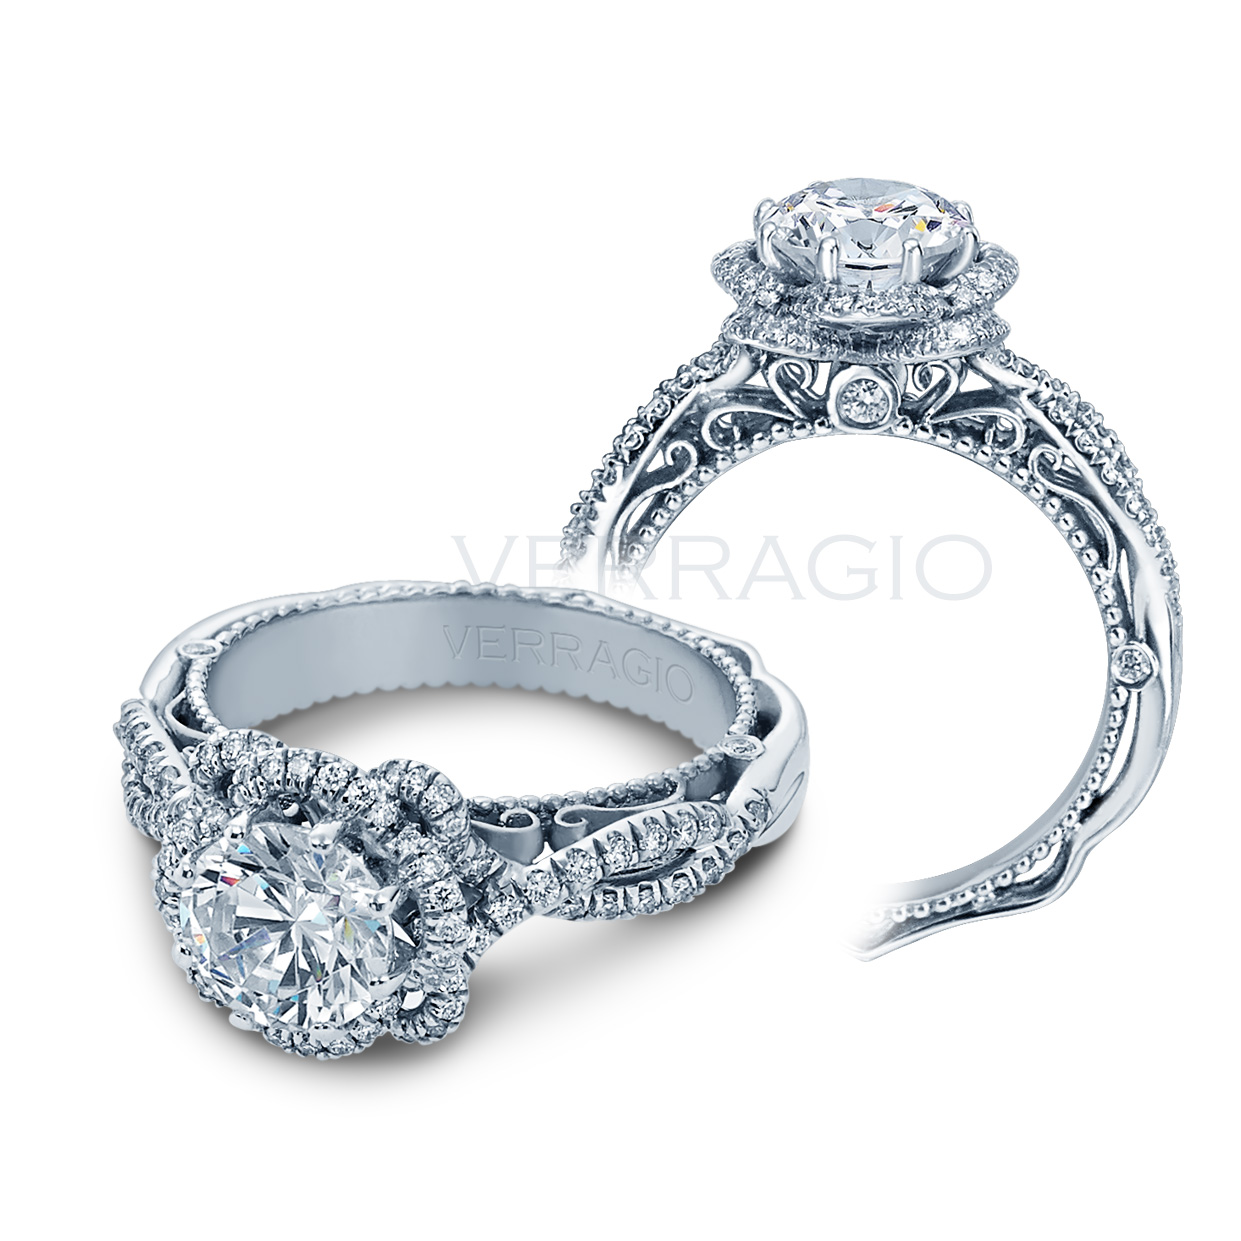 Verragio Diamond Engagement Ring Mounting